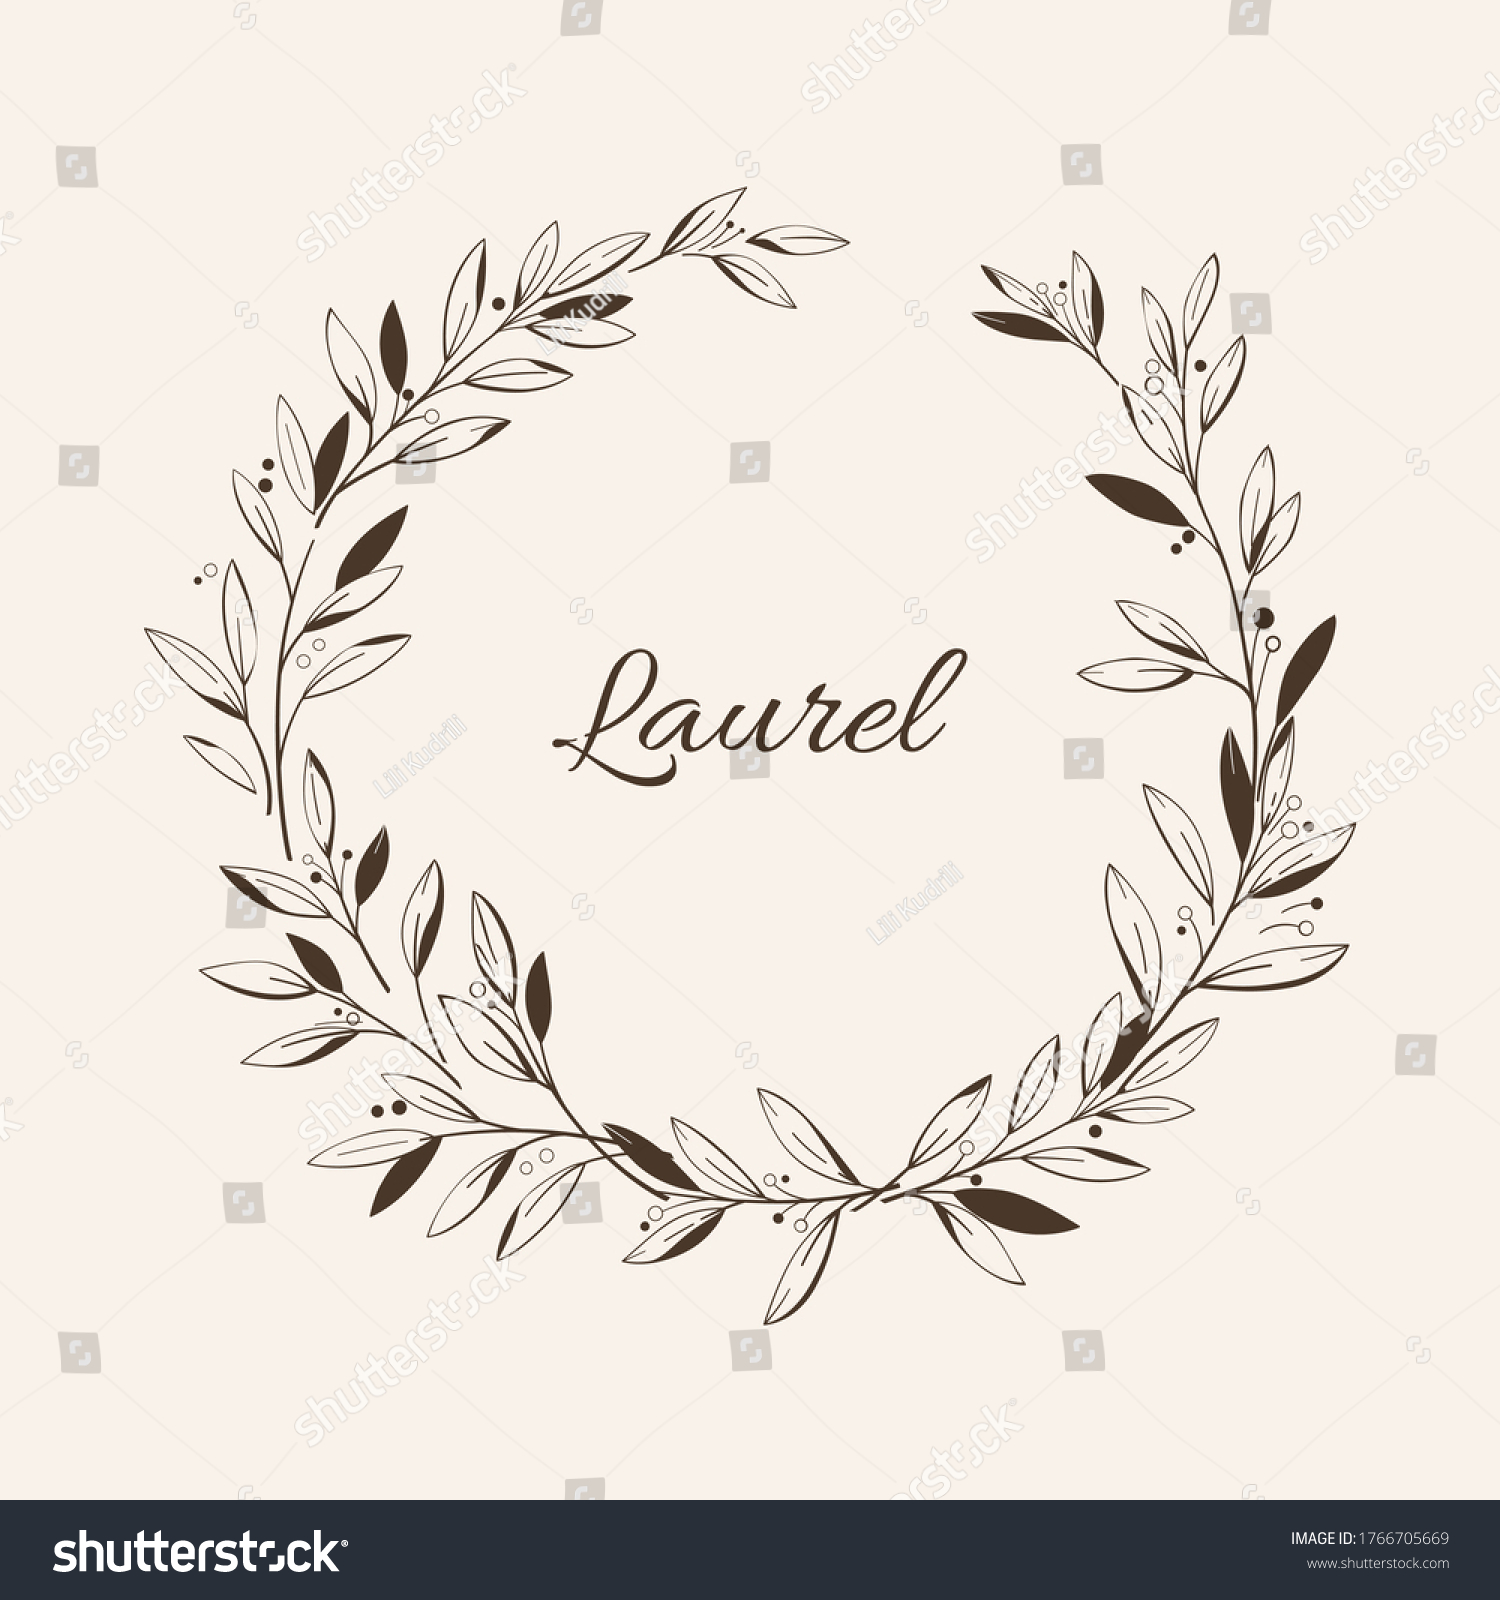 SVG of Laurel wreath. Vector design elements in boho style. Illustration for greeting card, packaging. svg